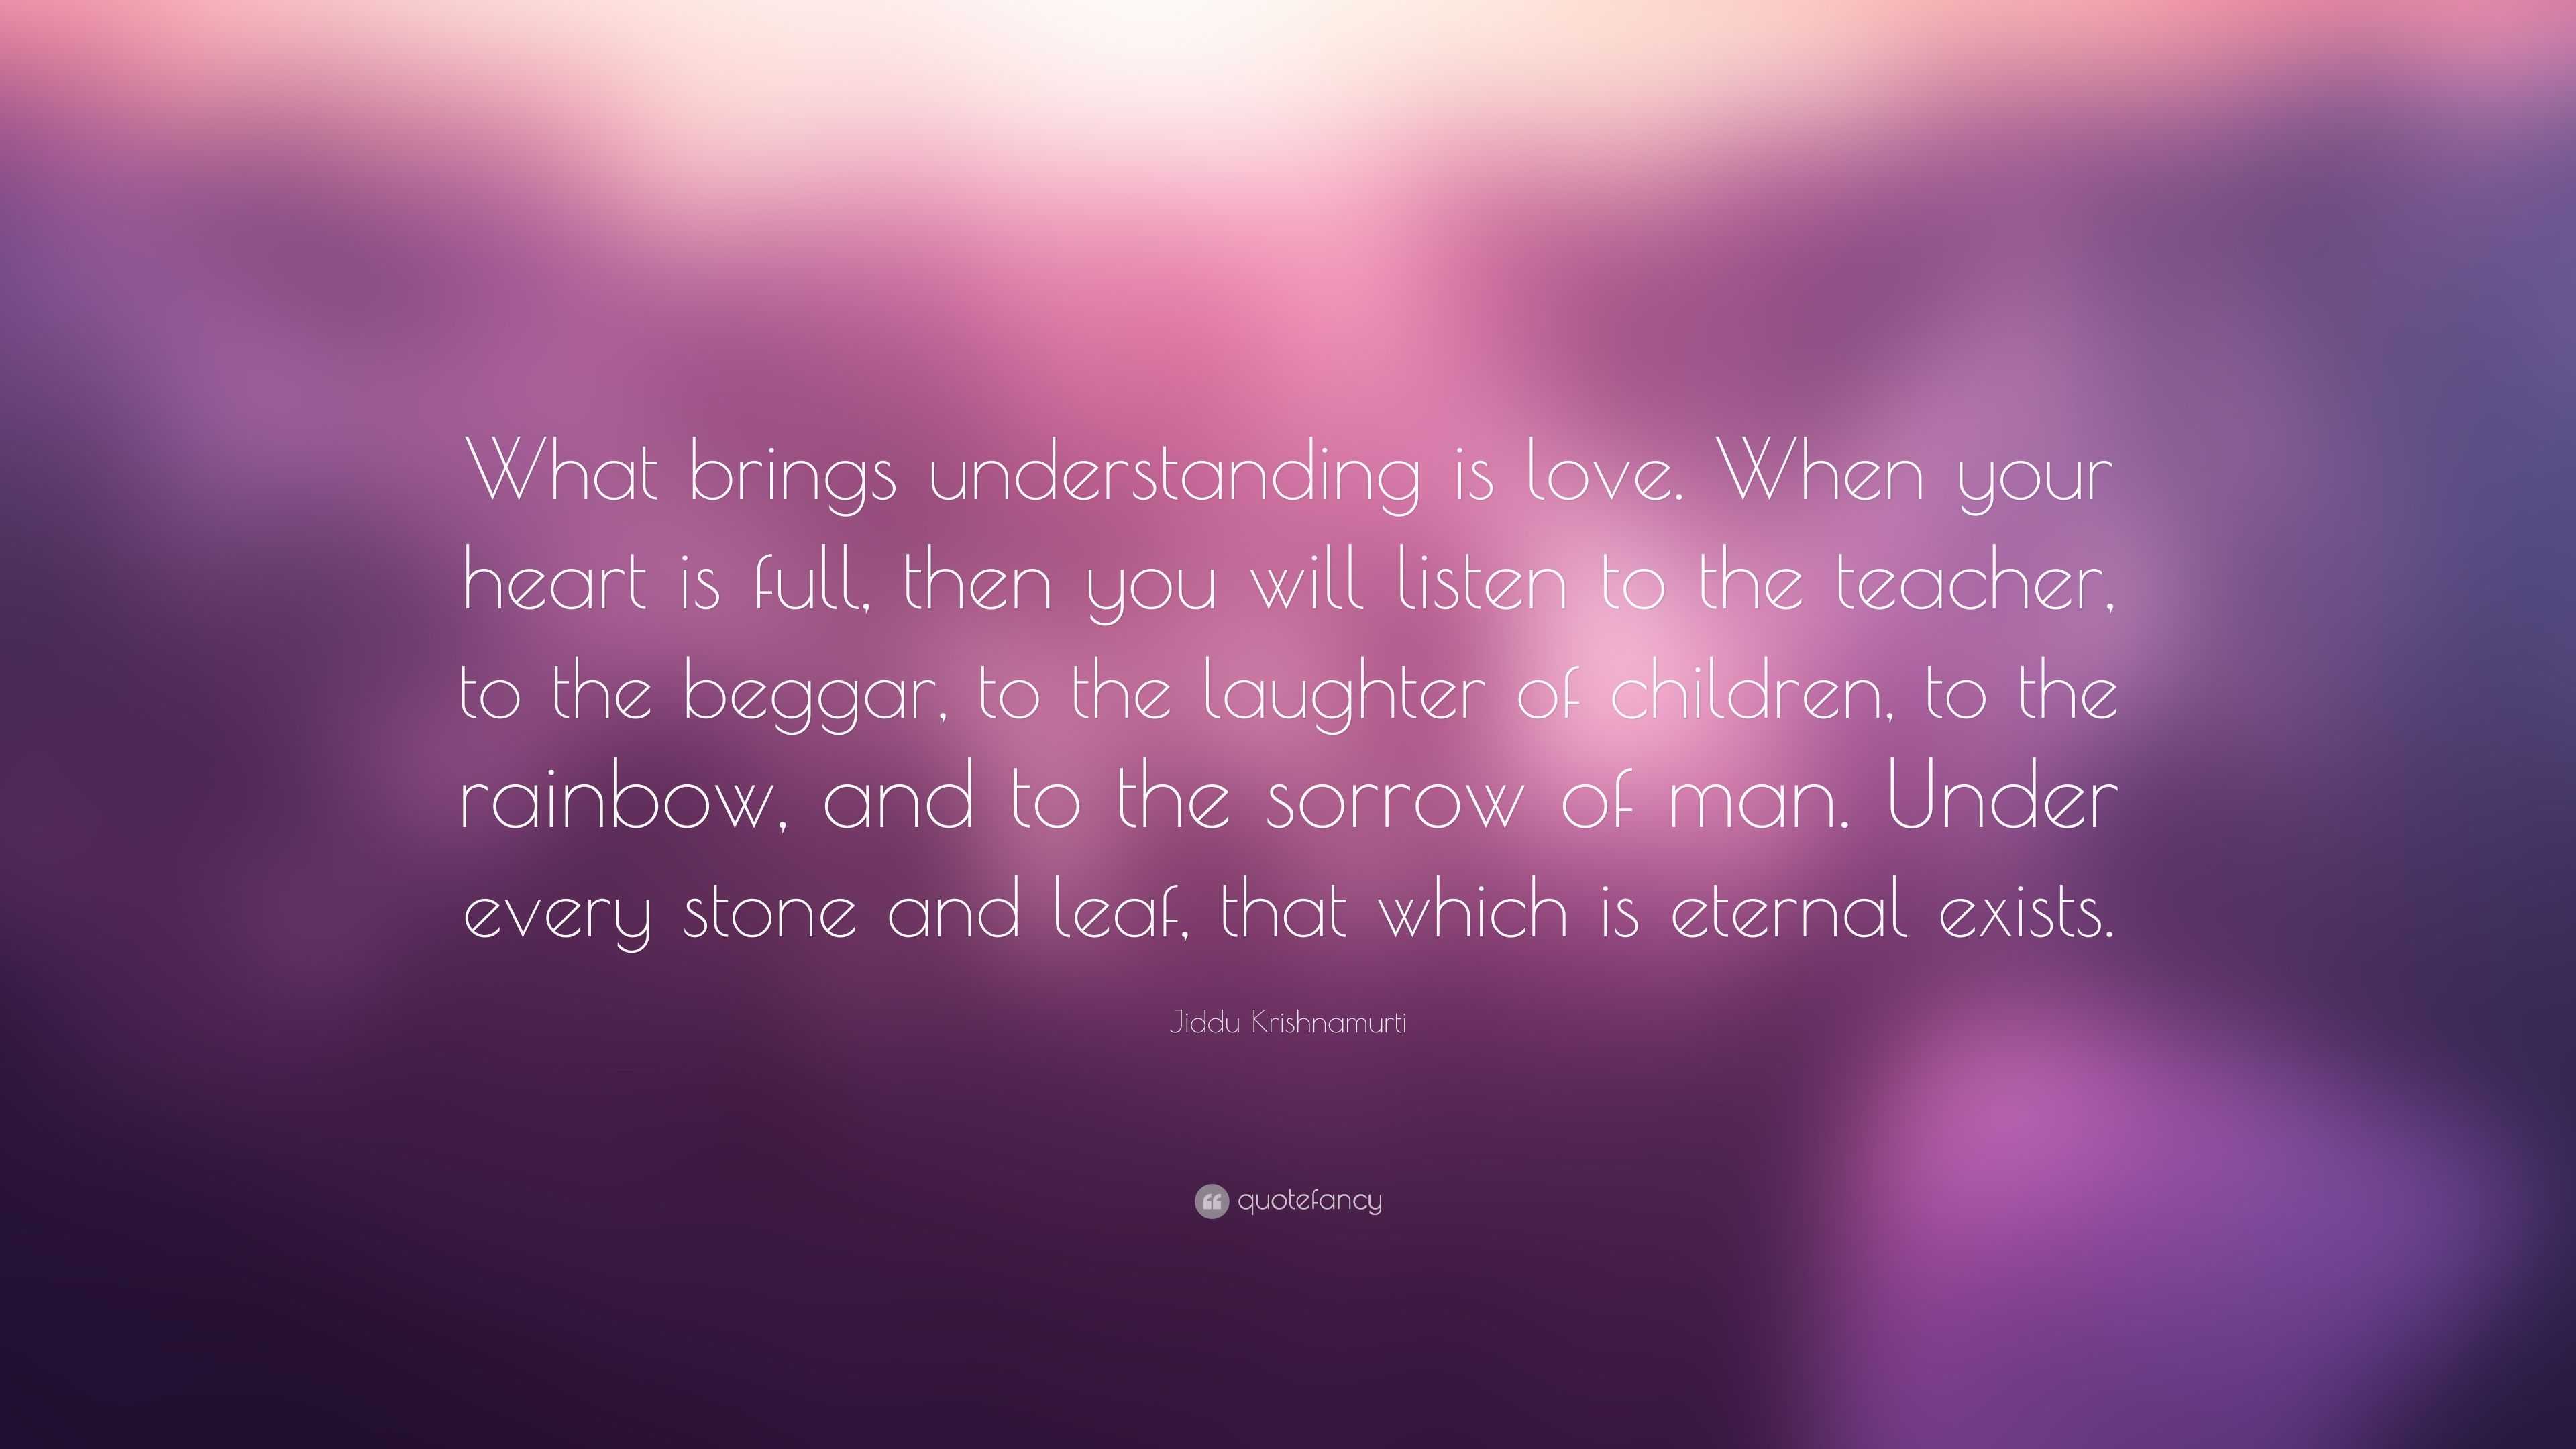 Jiddu Krishnamurti Quote: “What brings understanding is love. When your ...